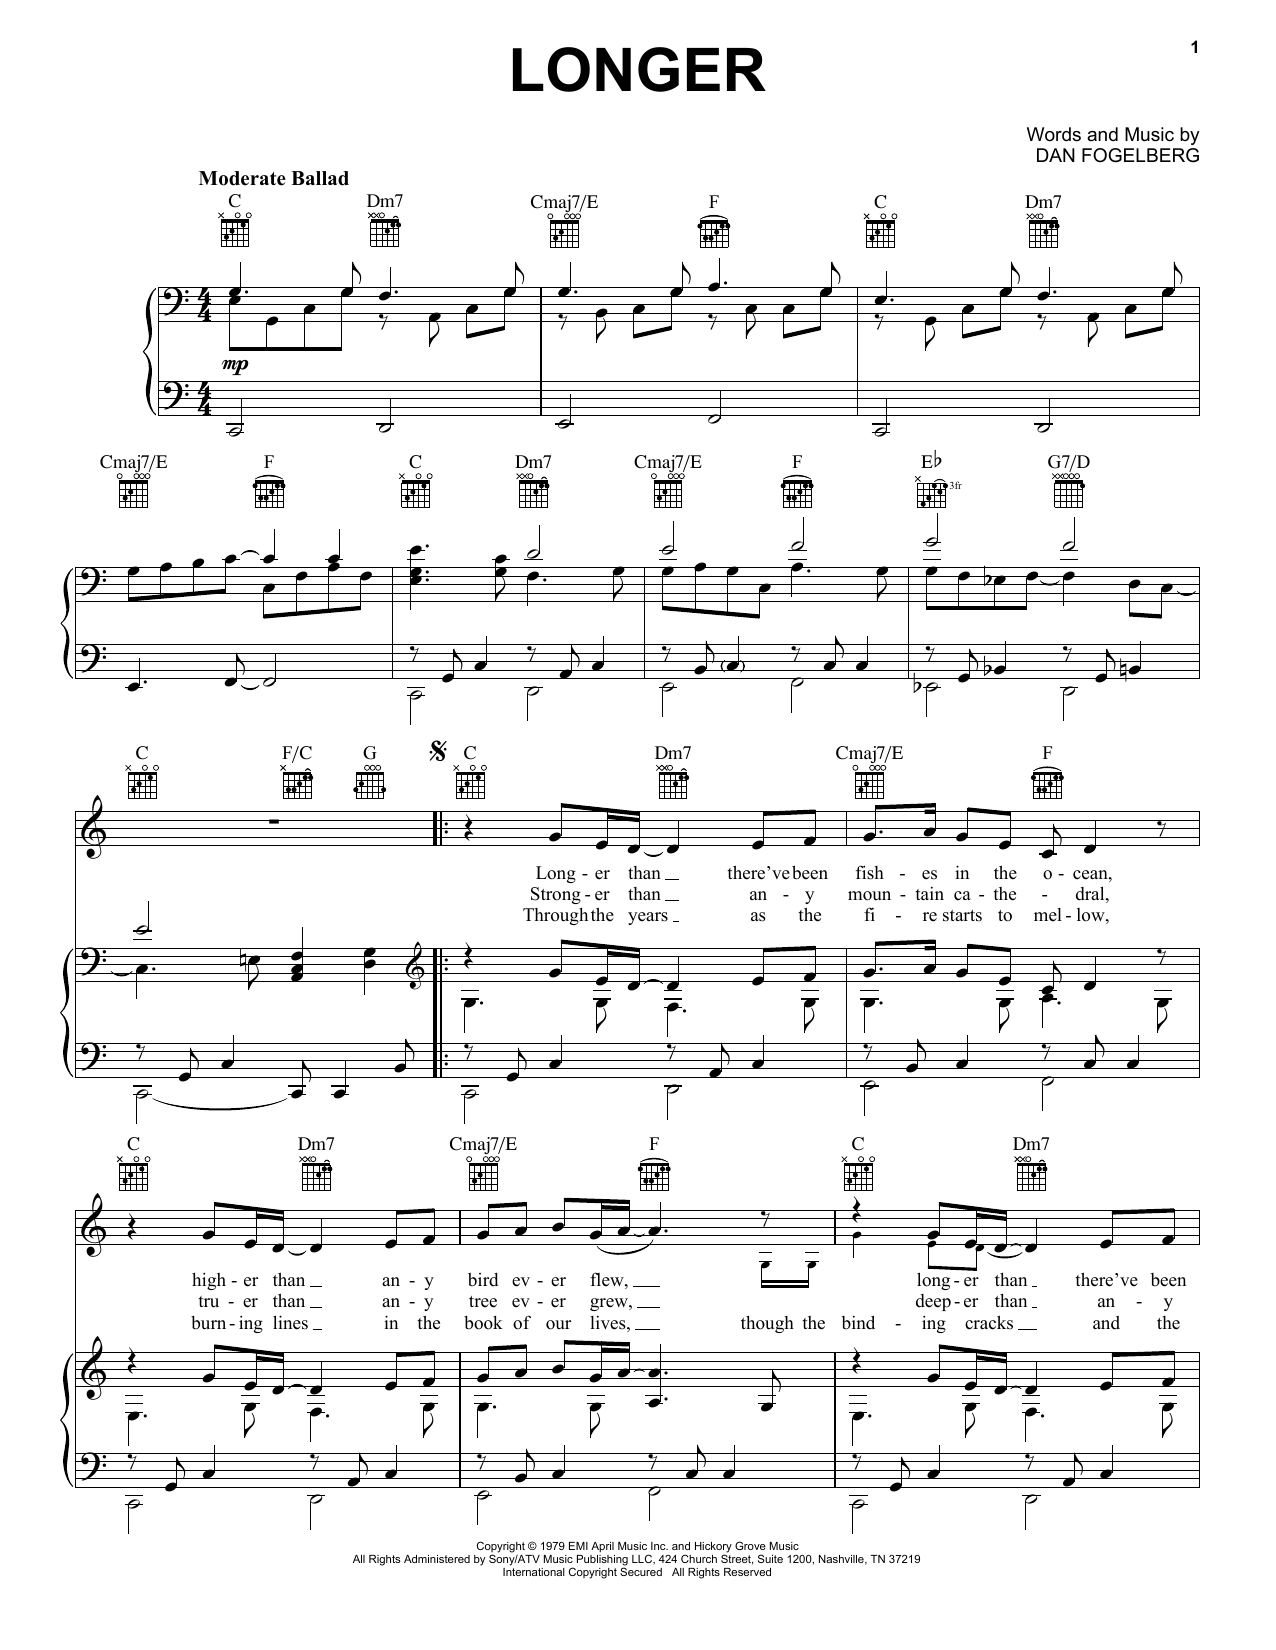 Dan Fogelberg Longer Sheet Music Notes & Chords for Voice - Download or Print PDF